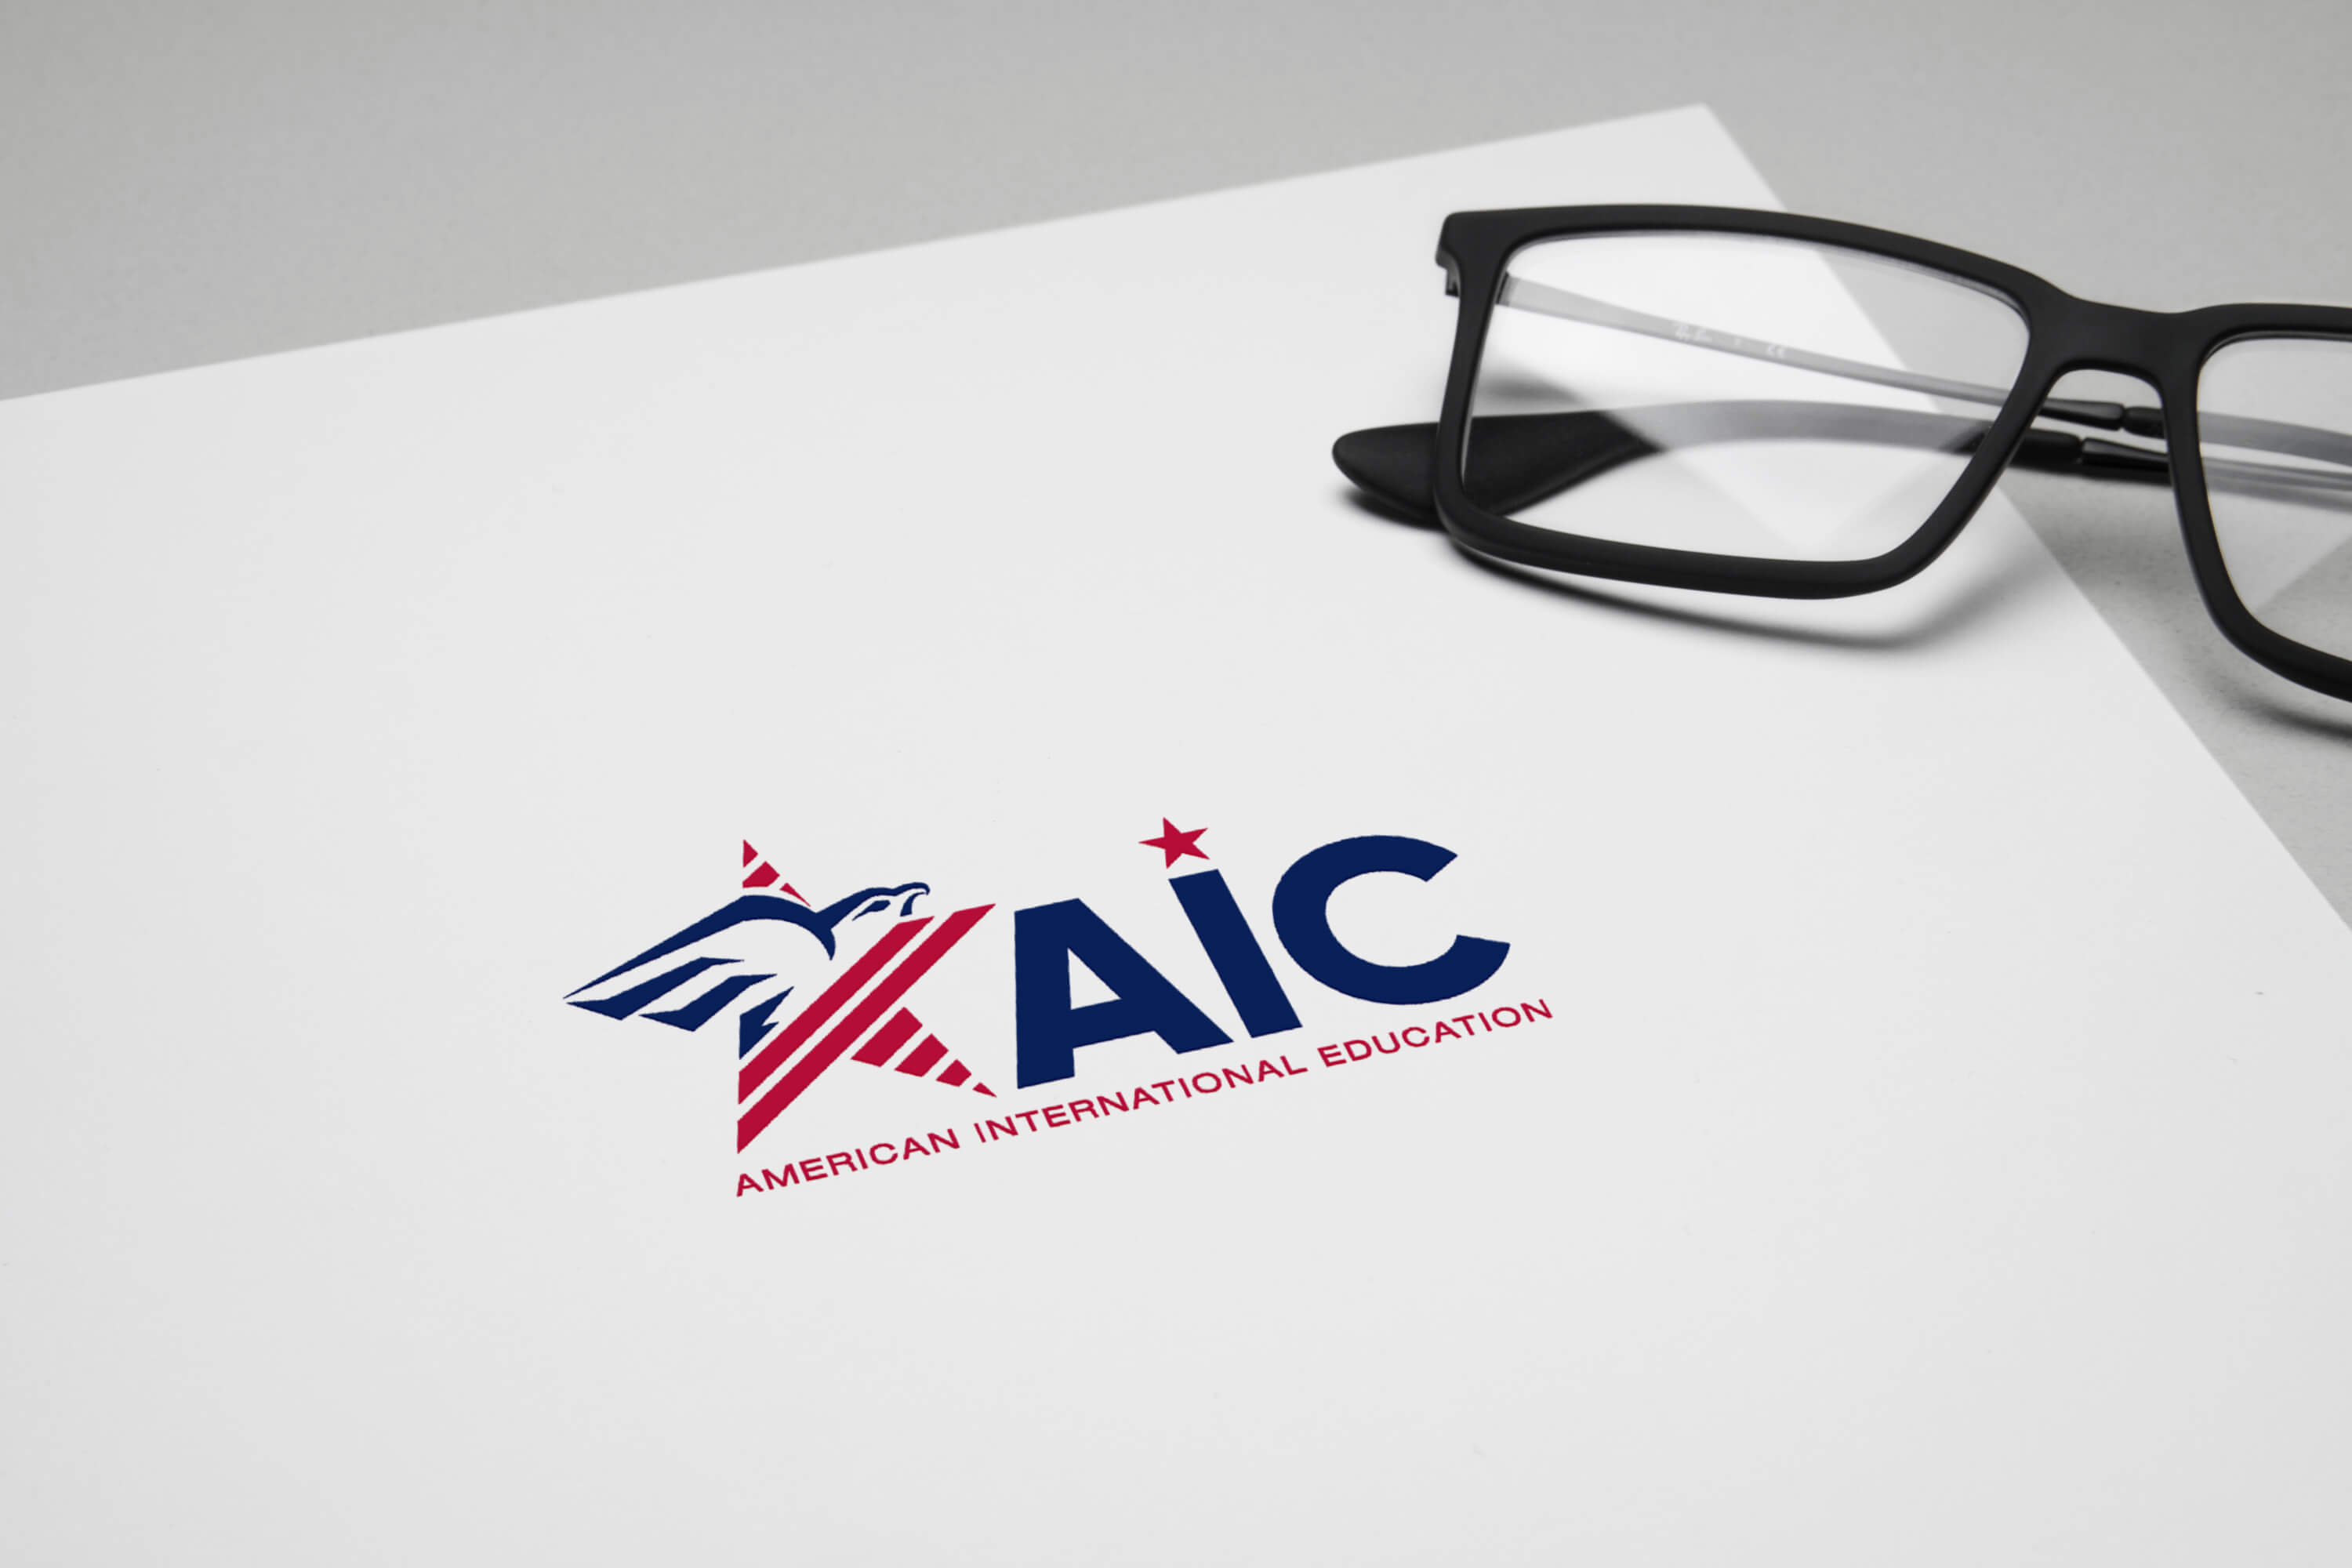 Thiết kế logo giáo dục AIC tại TP HCM